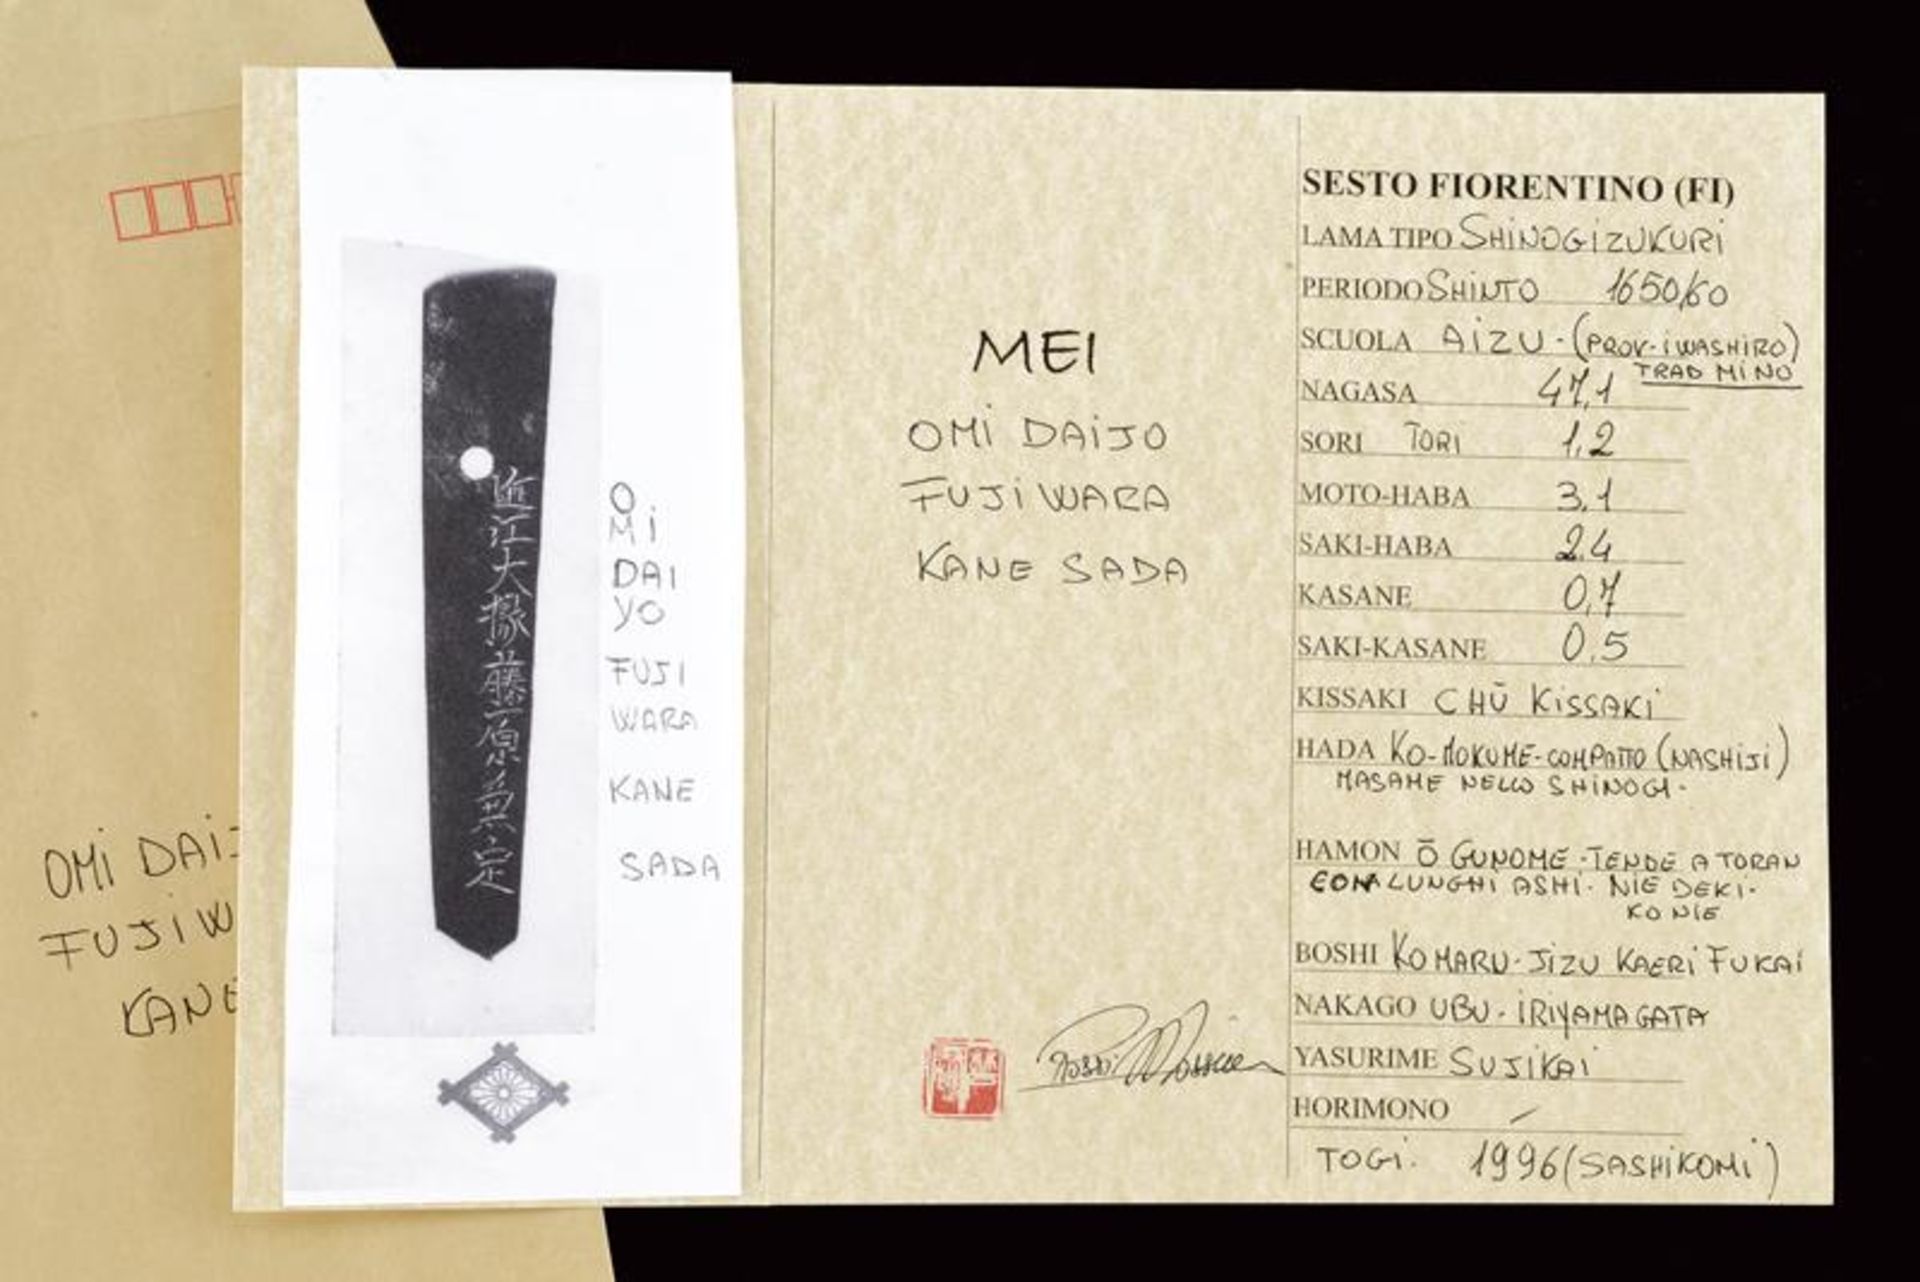 A fine wakizashi signed Omi Daijo Fujiwara Kane Sada - Image 11 of 14